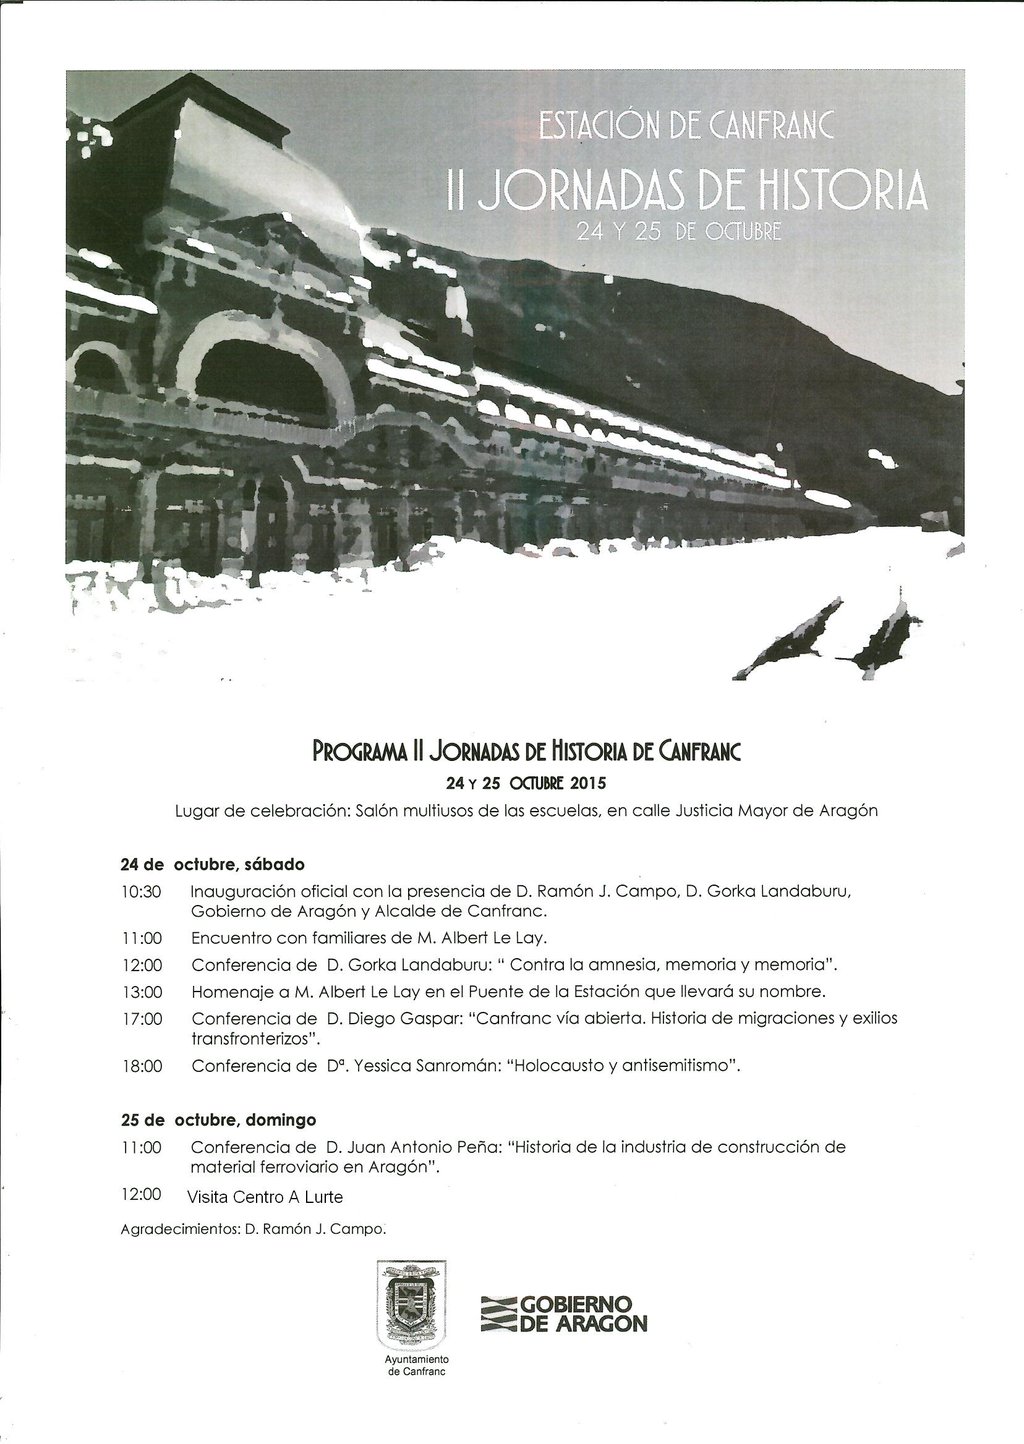 II Jornadas de Historia - Estación de Canfranc